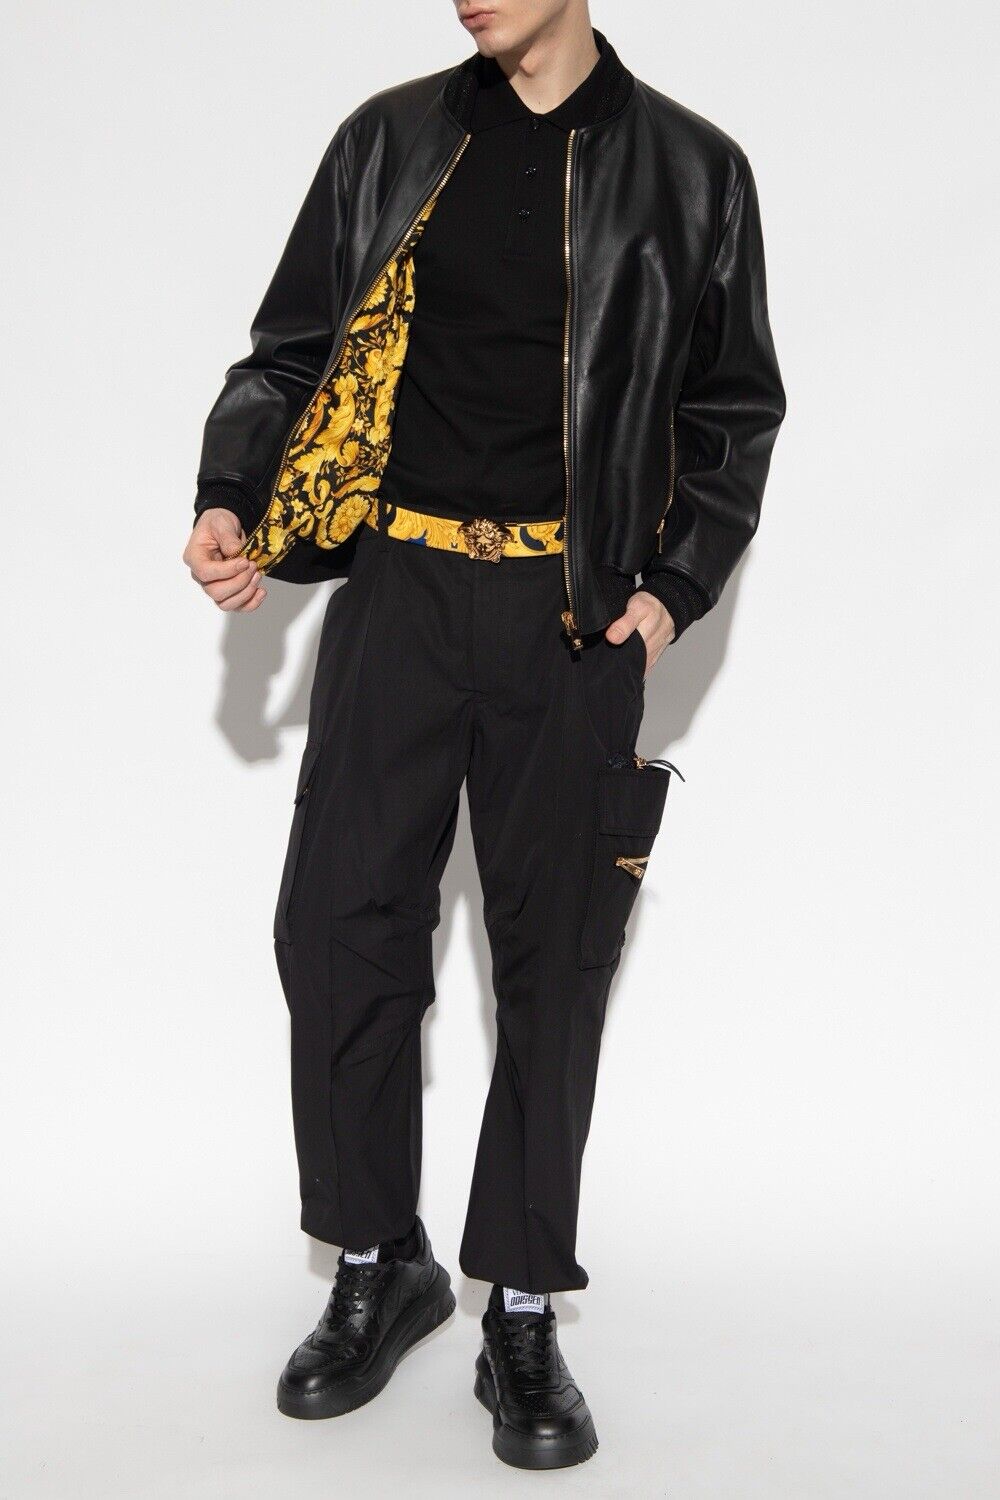 Versace Men's Calf Leather Heavy Jacket Black 48 US (58 Eu) IT NWT $3625 1007634